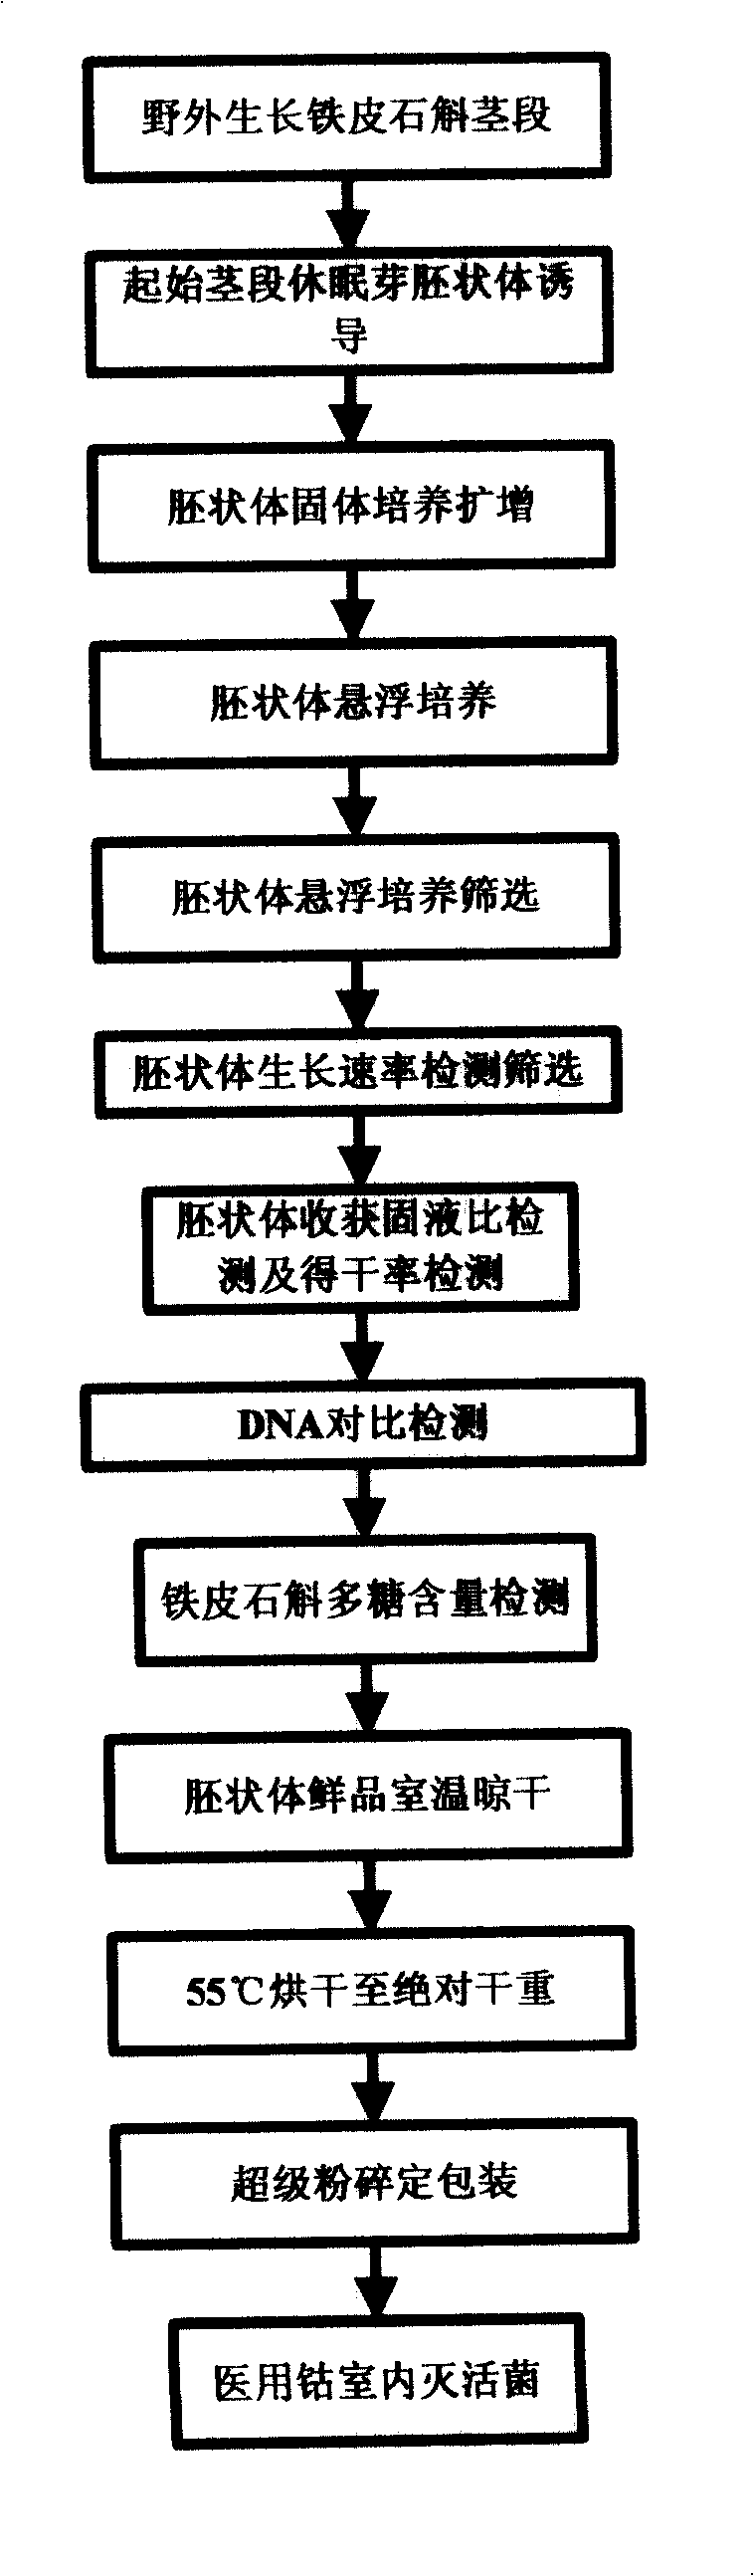 Technique for suspension cultivation of algam dendrobium nobile embryoid of medicinal effective composition of native plant strain